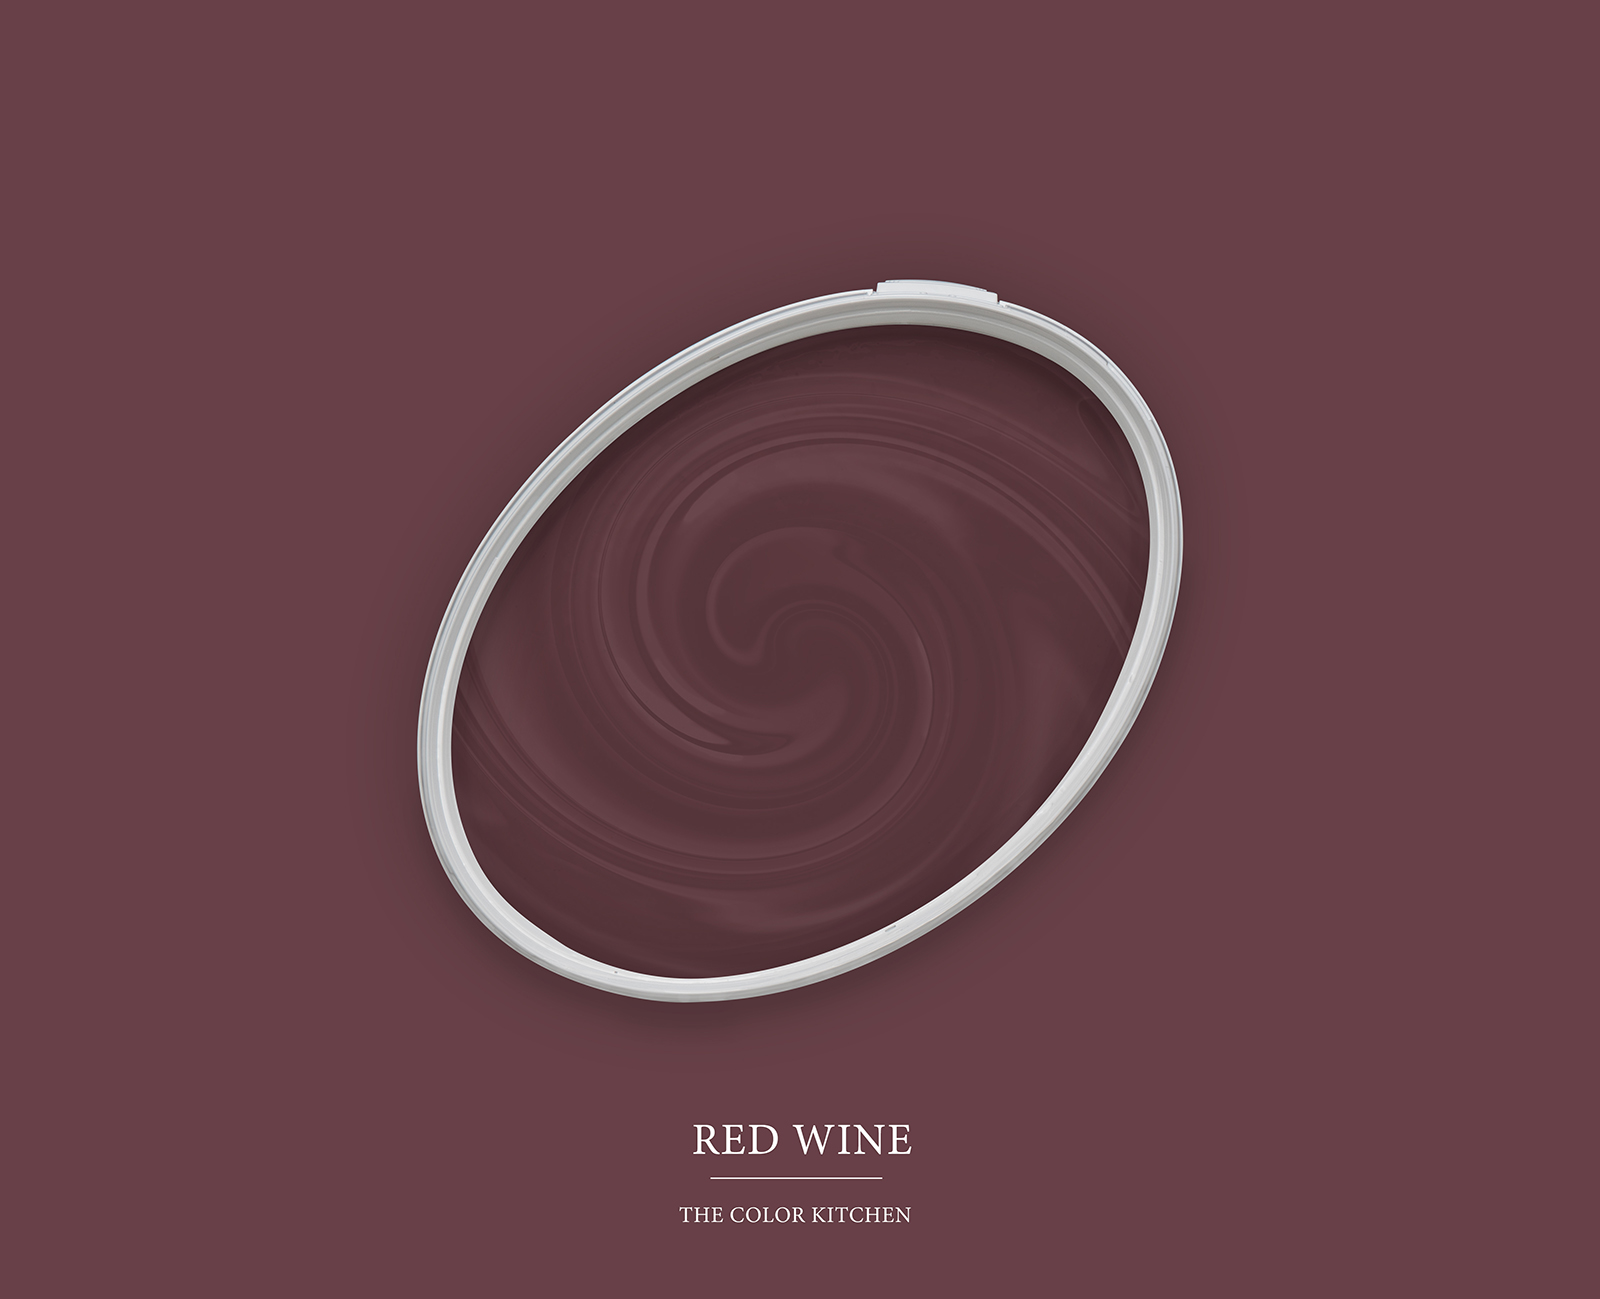         Wandfarbe TCK7013 »Red Wine« in einem intensivem Bordeaux – 2,5 Liter
    